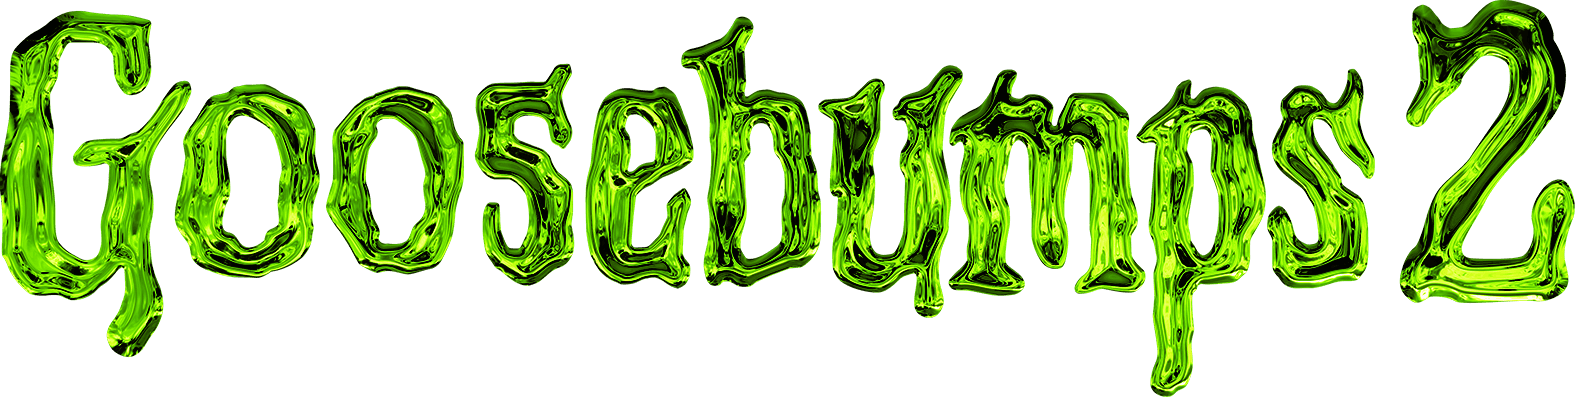 Goosebumps 2: Haunted Halloween logo